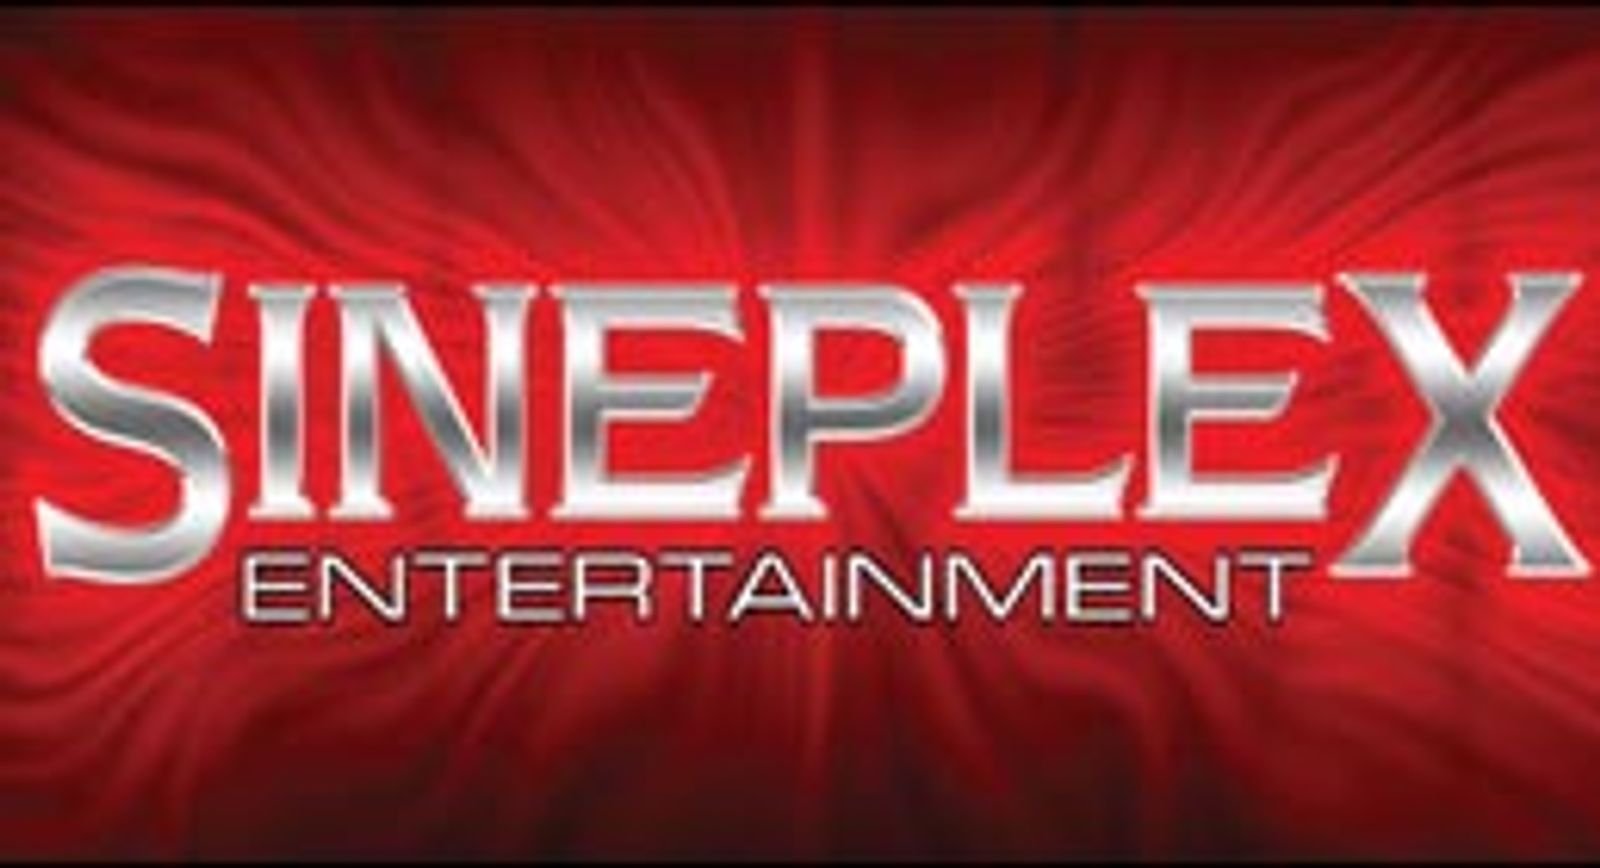 Sineplex Entertainment to Throw Kickoff Party